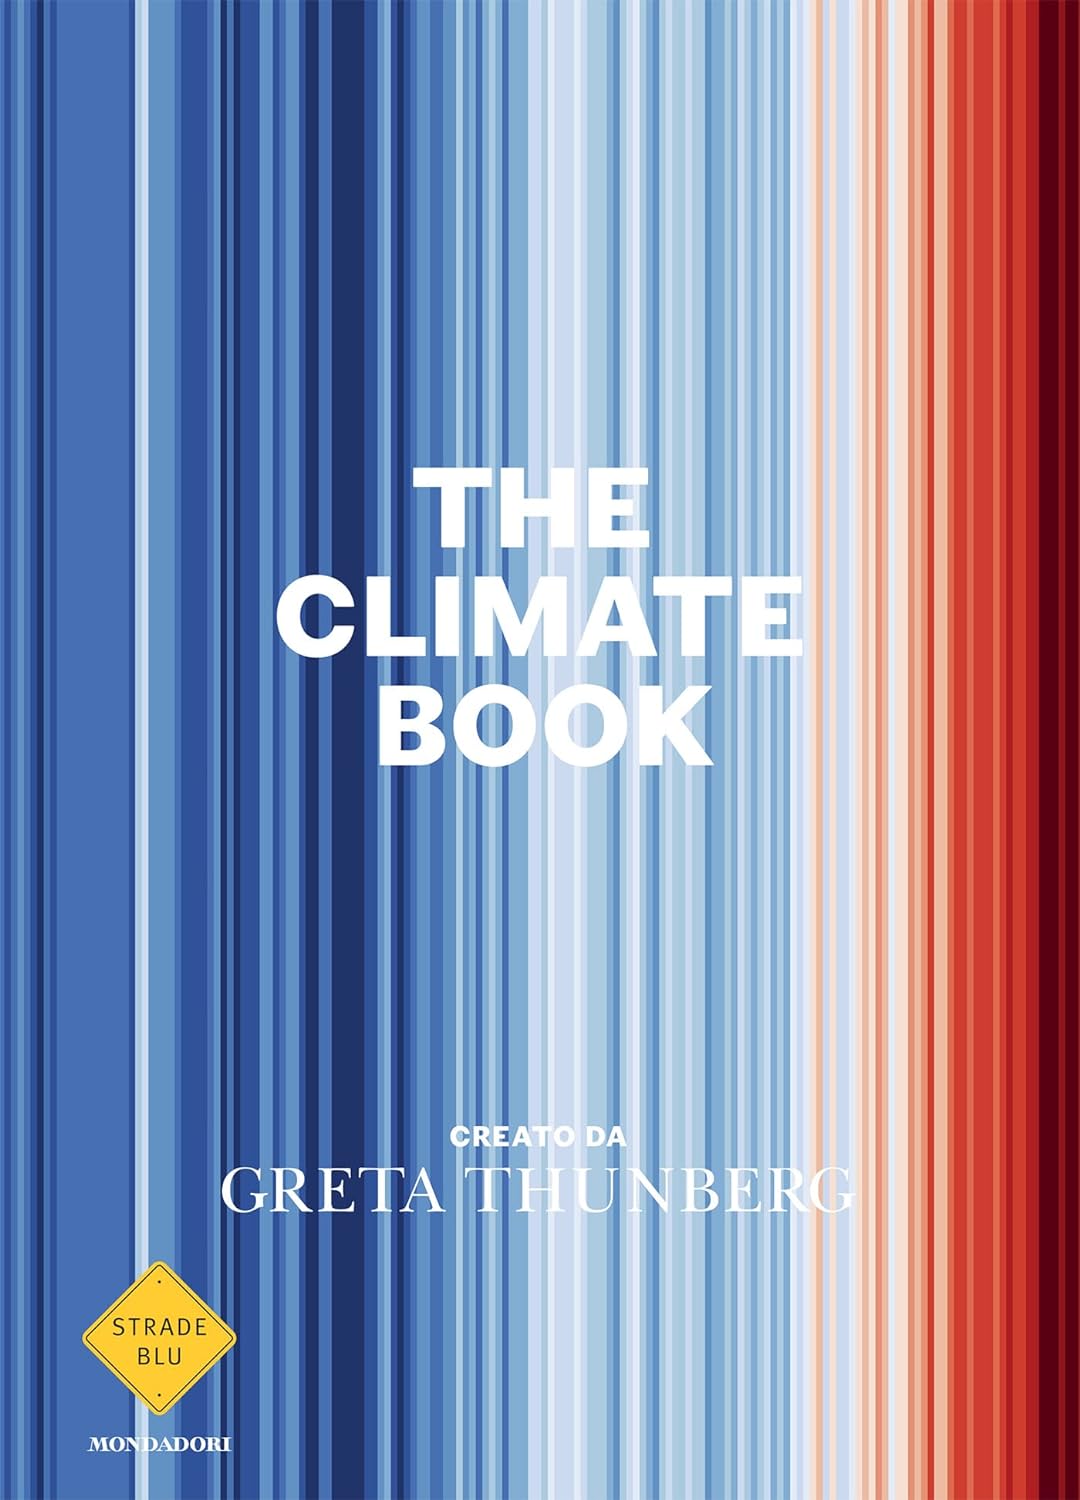 Greta Thunberg: The climate book (Italiano language, Mondadori)